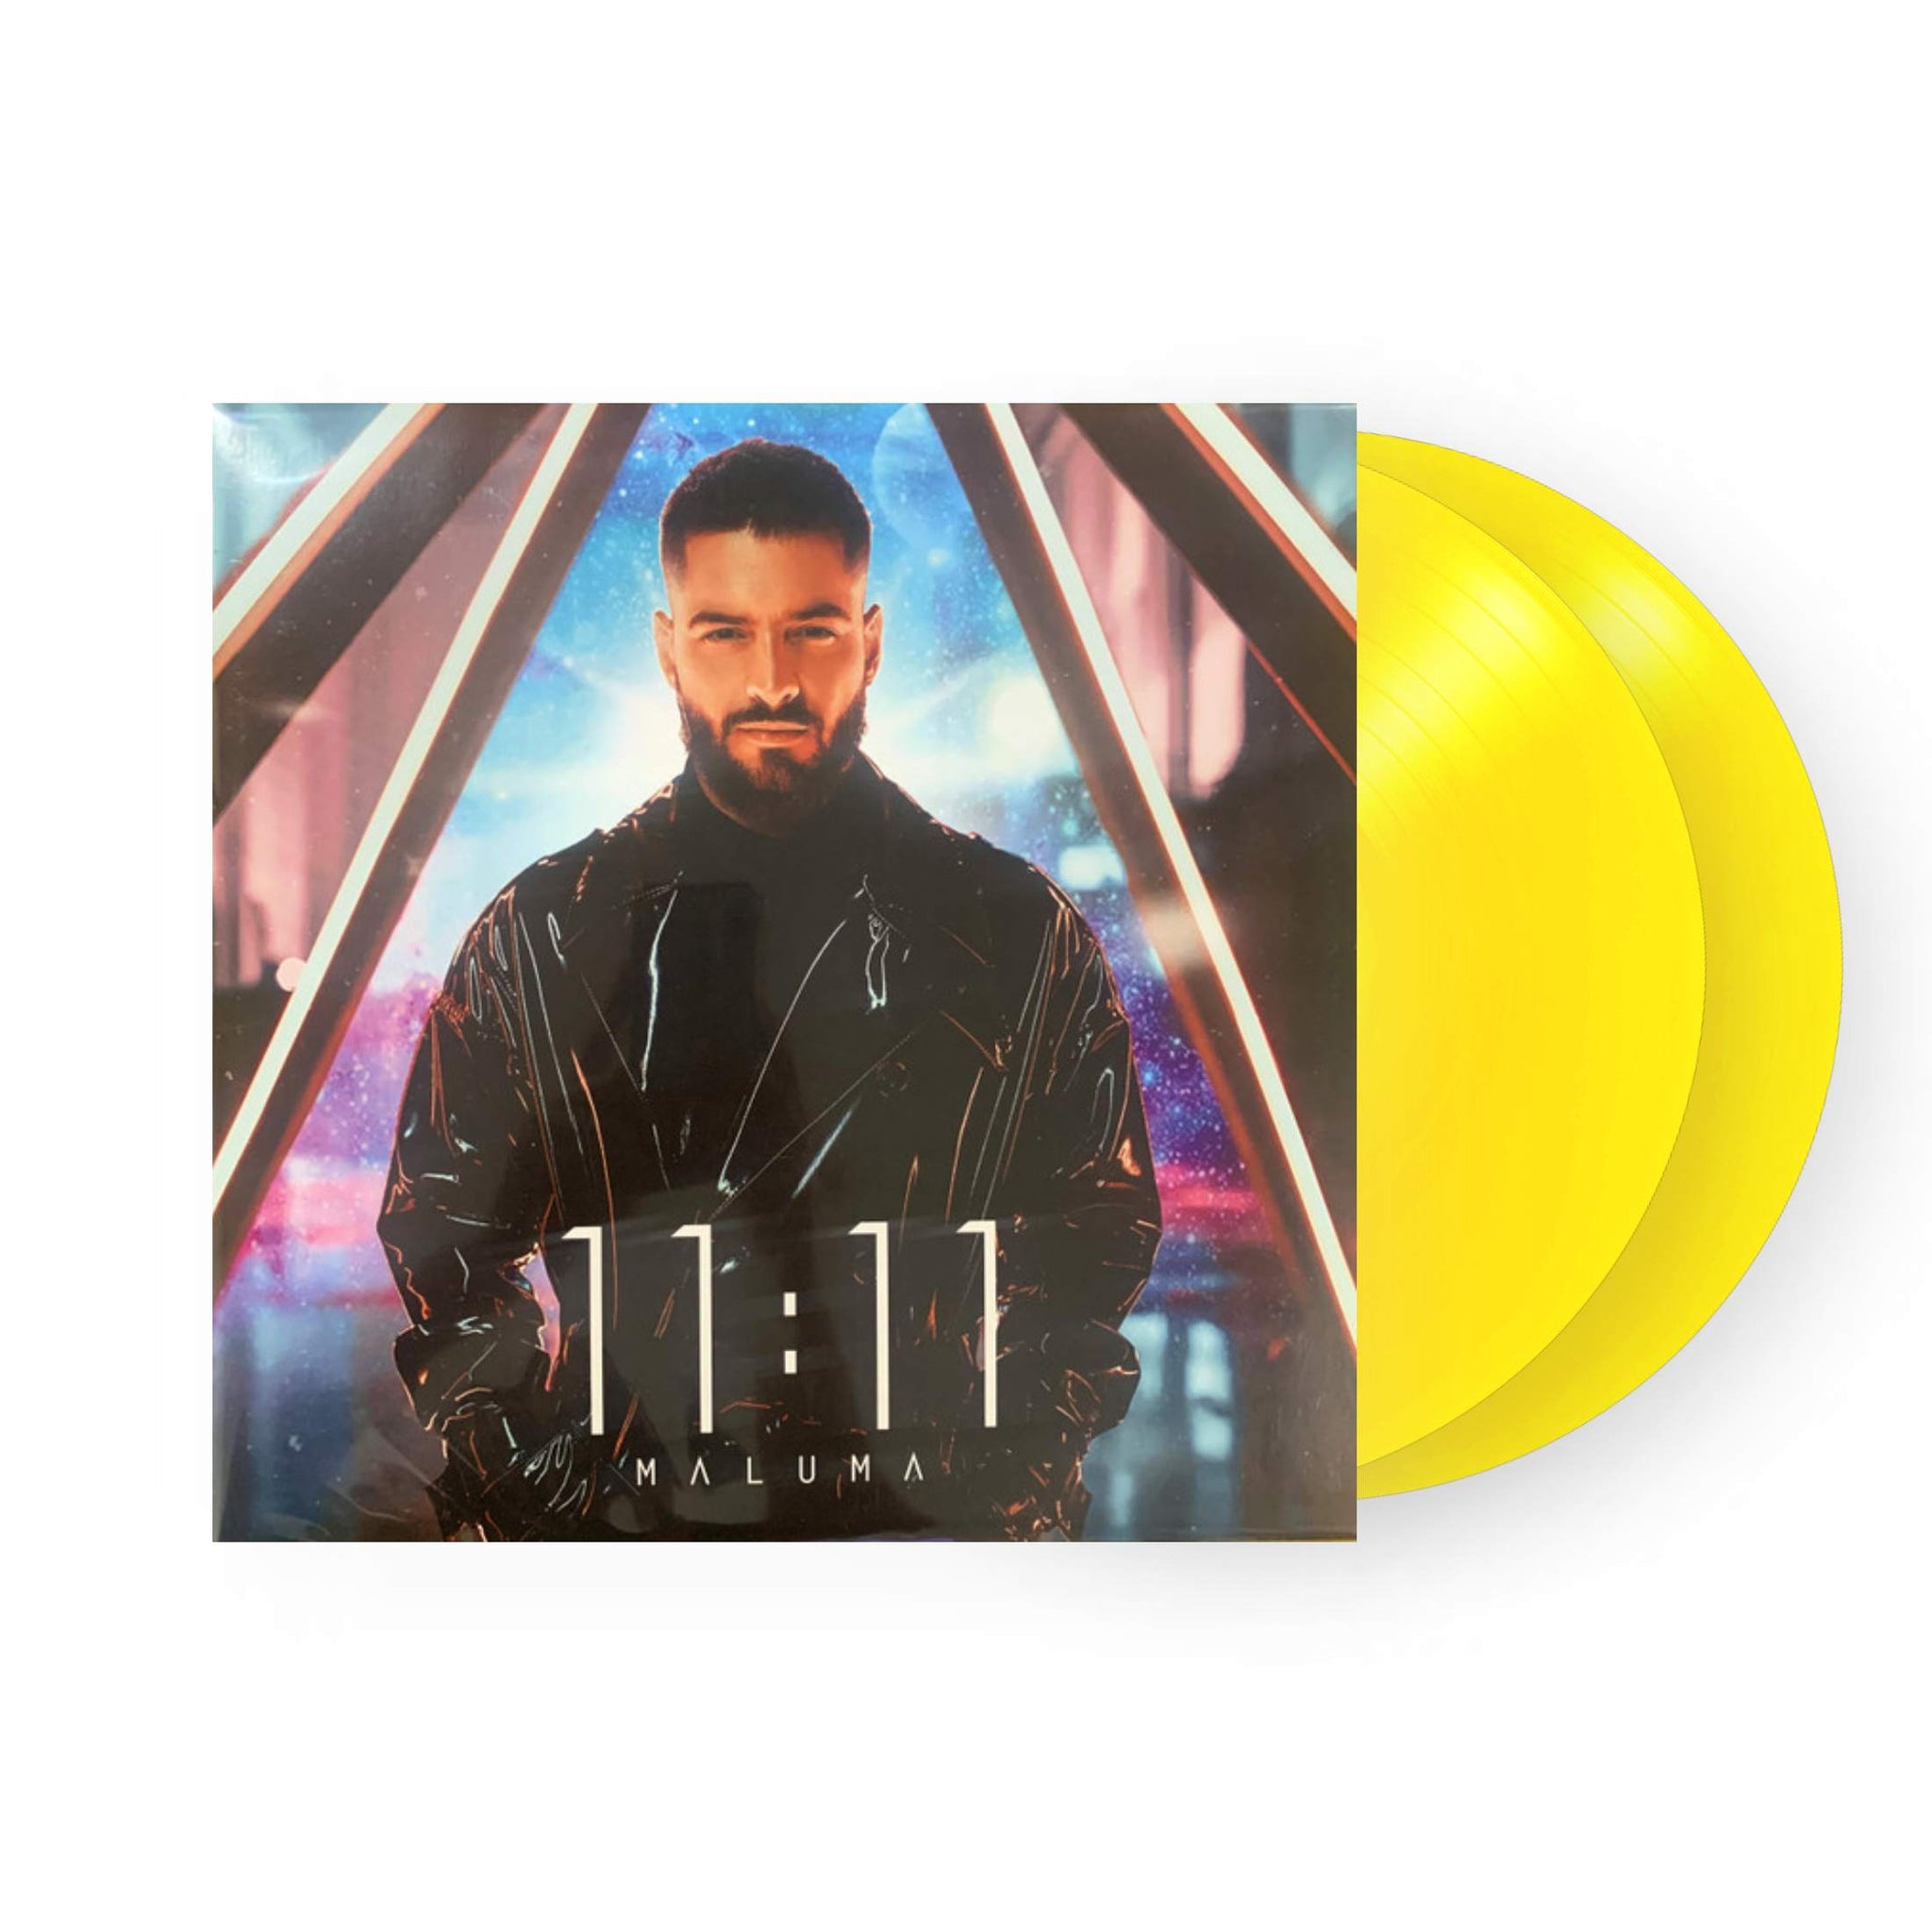 Maluma - 11:11 2xLP  (Neon Yelllow Vinyl)